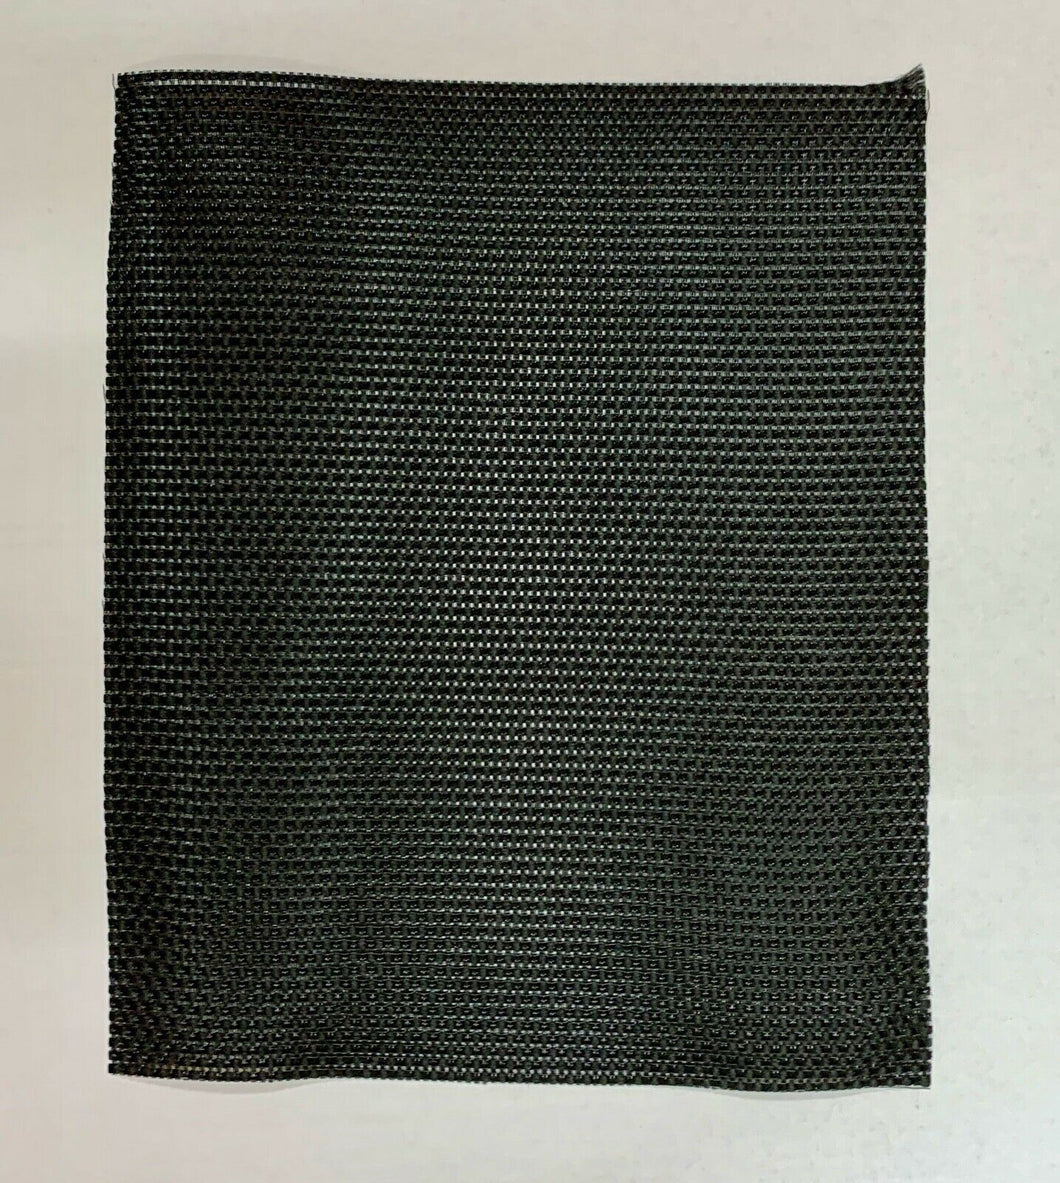 khorn black speaker fabric - FREE US Shipping!